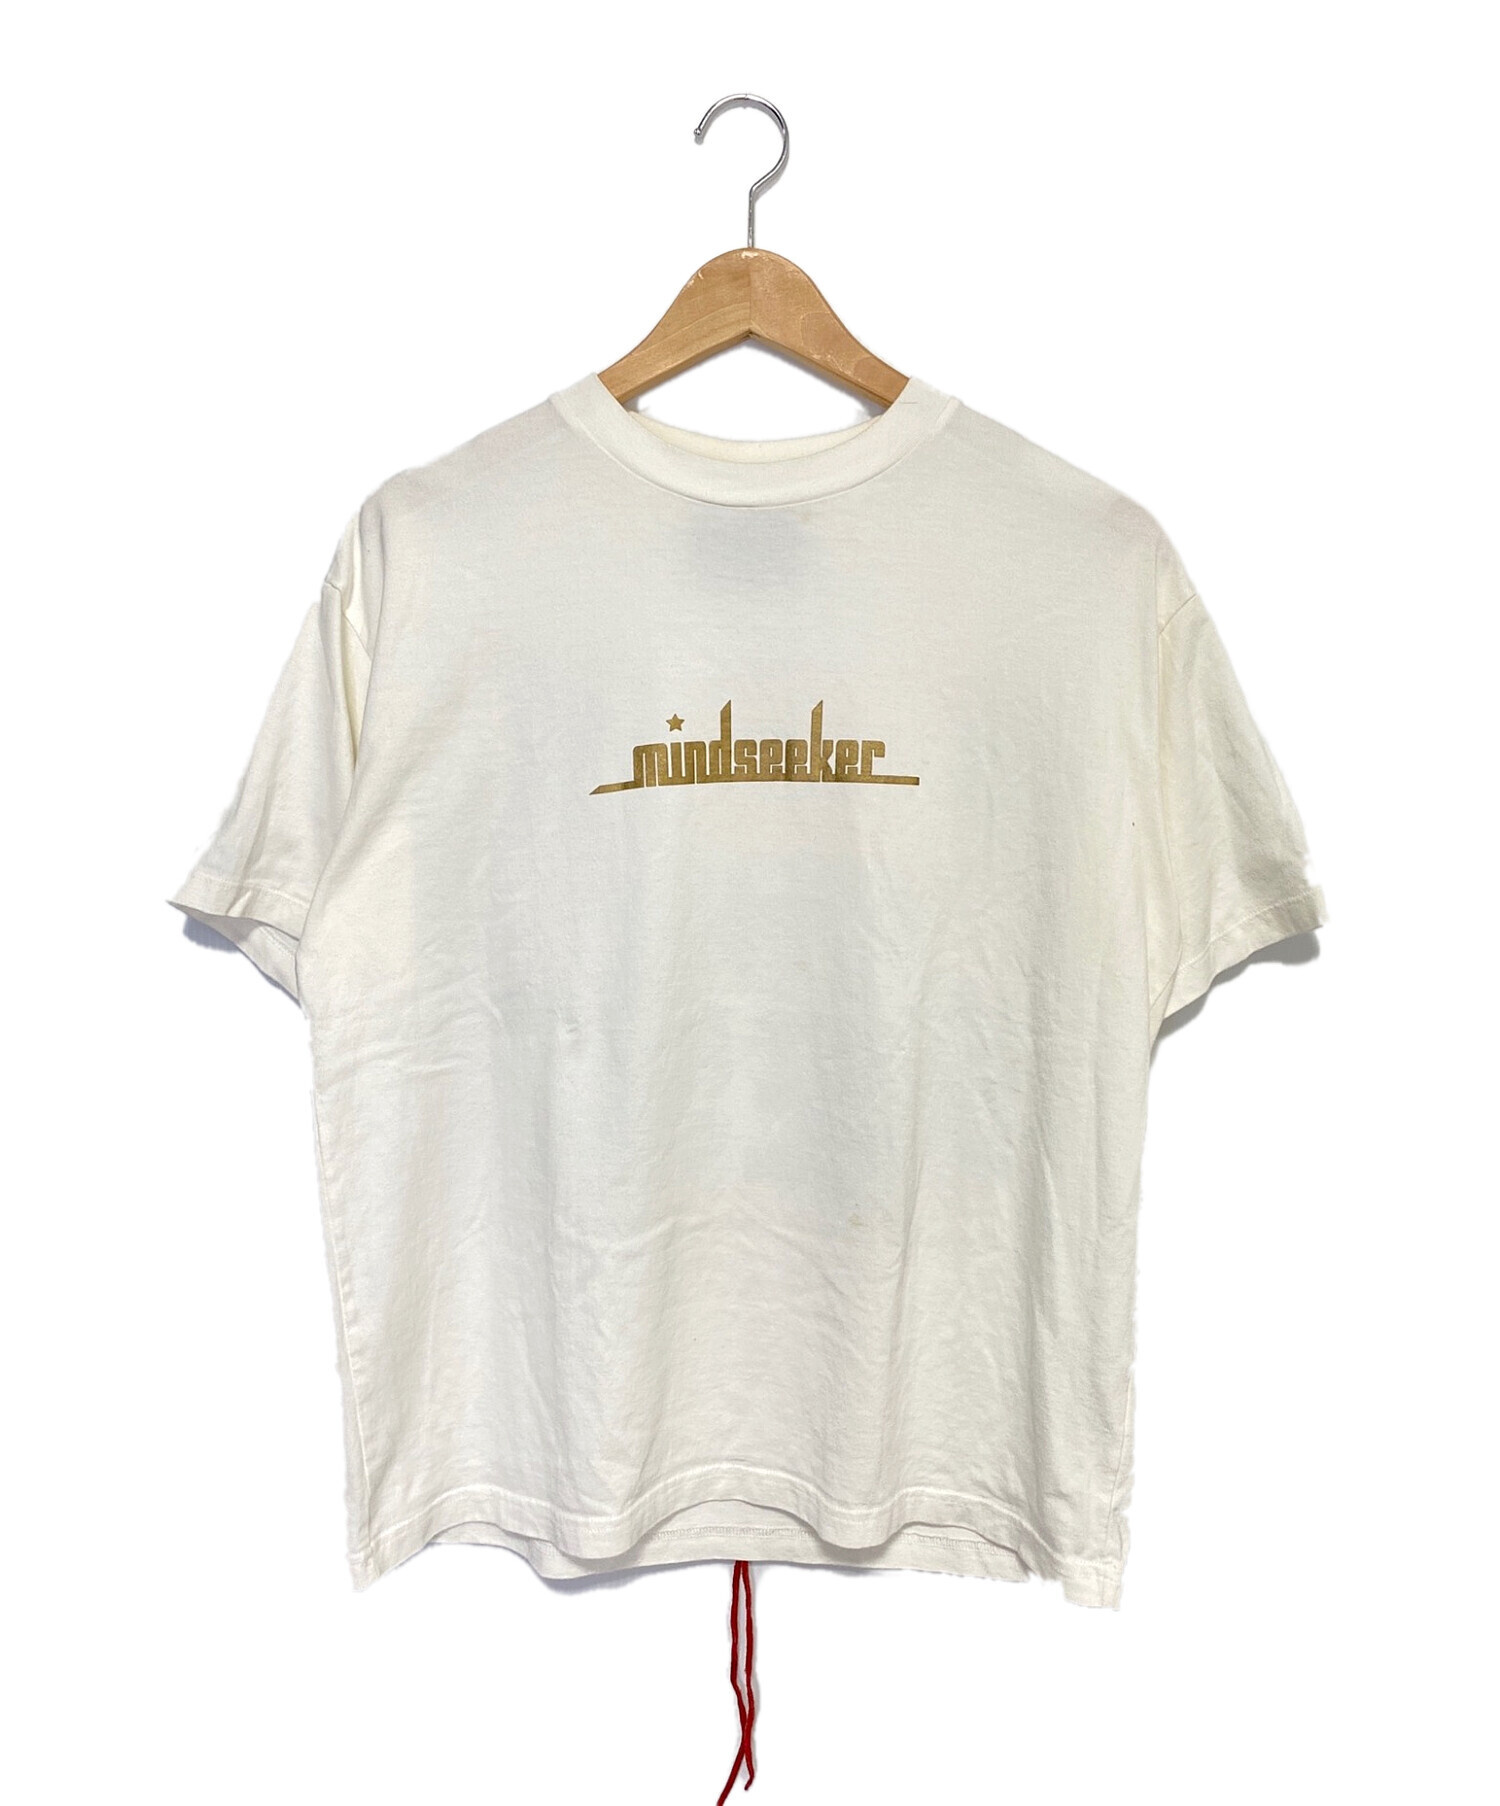 MINDSEEKER (マインドシーカー) Tシャツ ホワイト サイズ:M